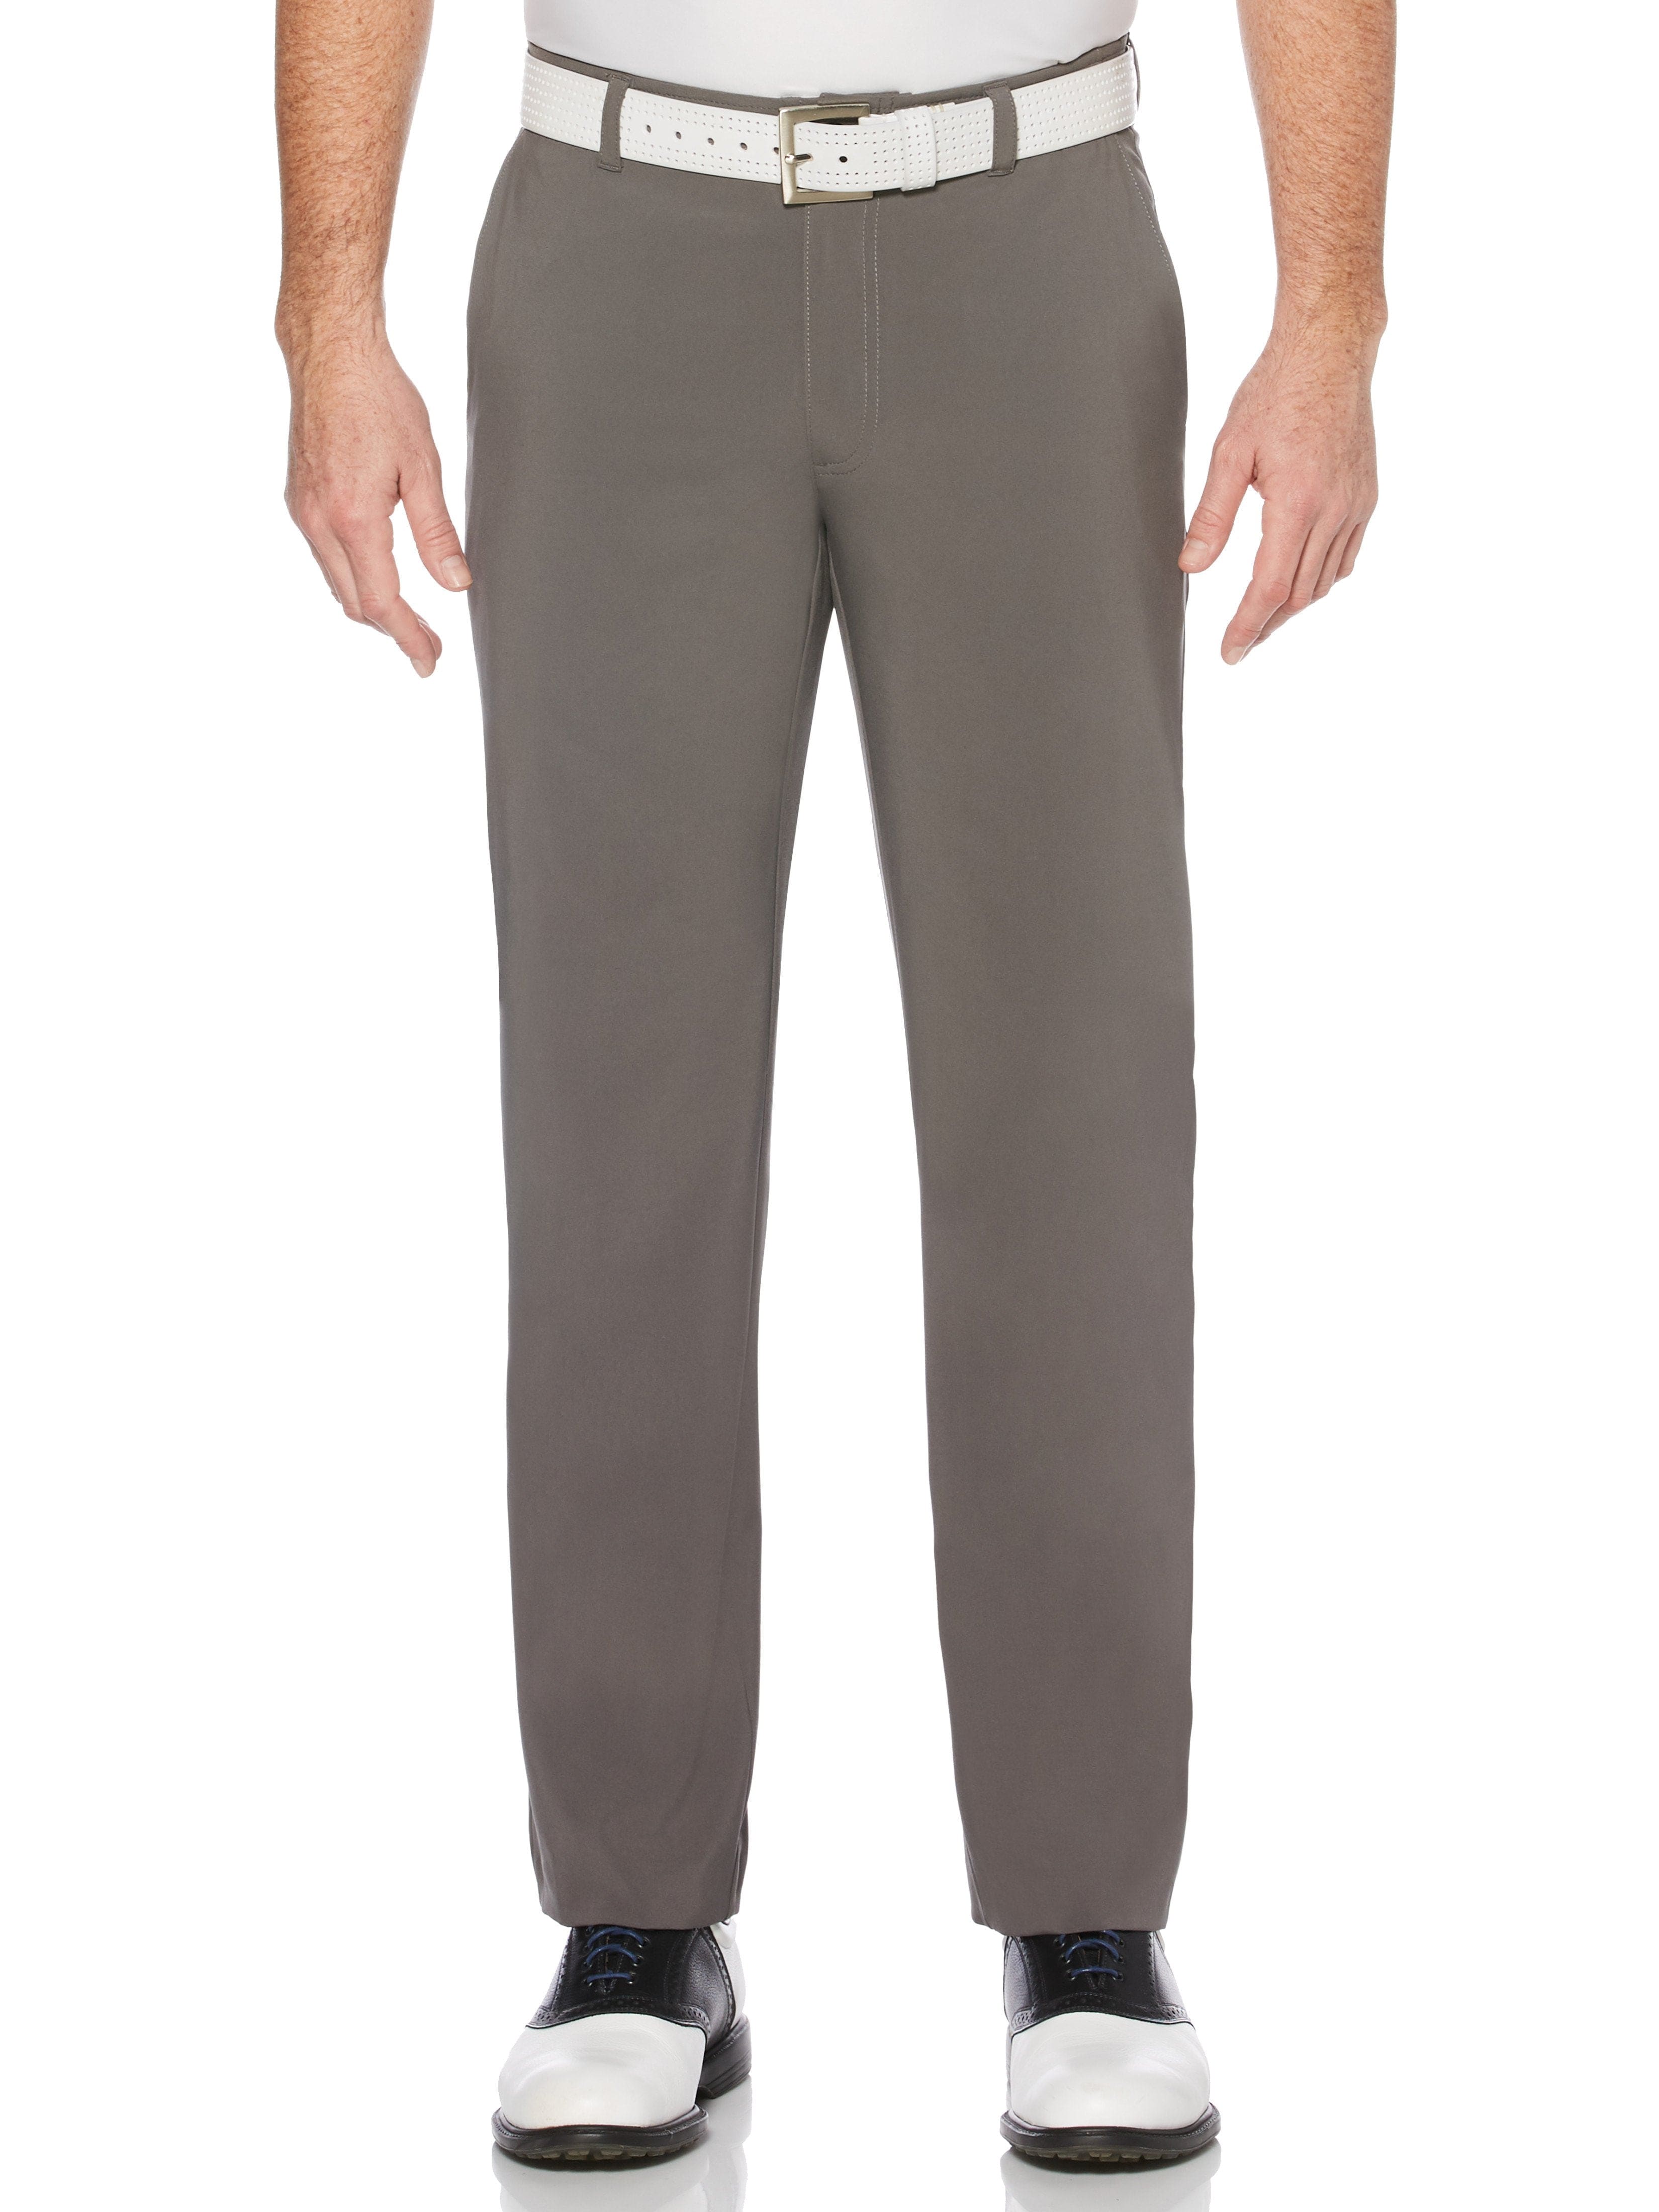 Jack Nicklaus Mens Flat Front Active Flex Pants, Size 38 x 29, Iron Gate Gray, Polyester/Elastane | Golf Apparel Shop